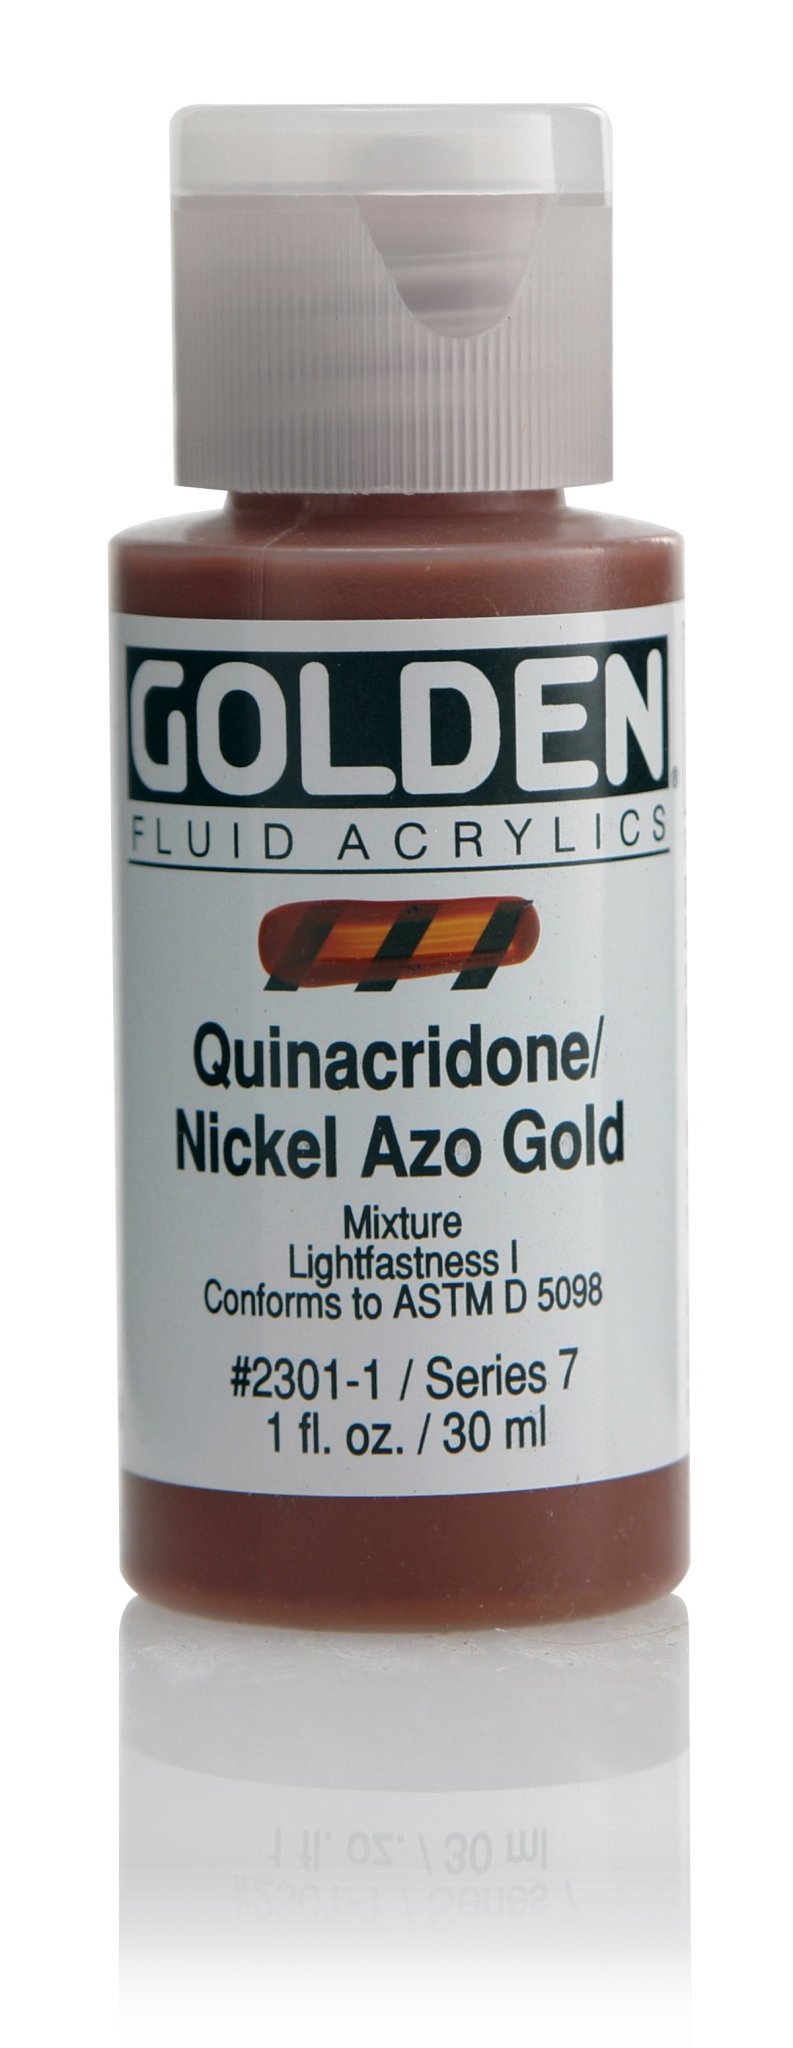 Golden Fluid Acrylics - Quinacridone/Nickel Azo Gold - 30ml - Create A Little Magic (Pty) Ltd